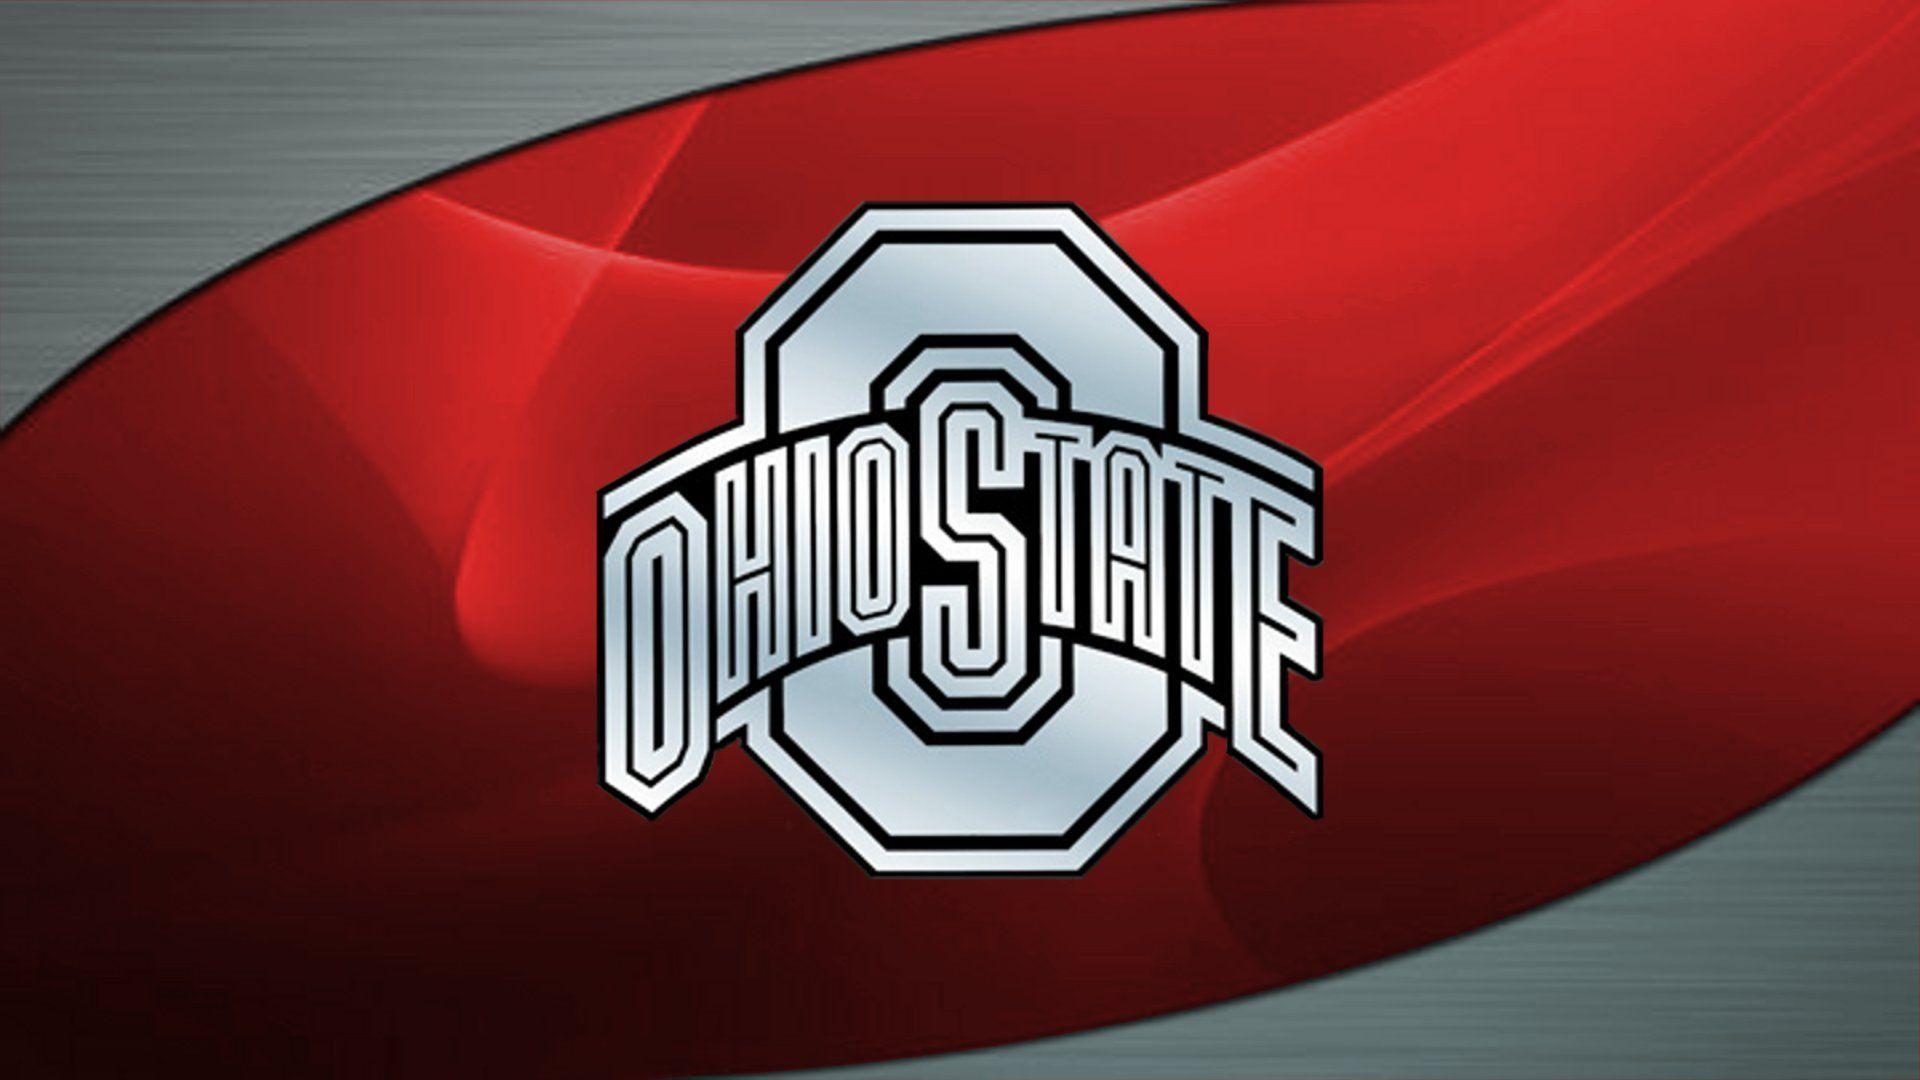 Ohio State Football Logo 2, Photo, Image in High